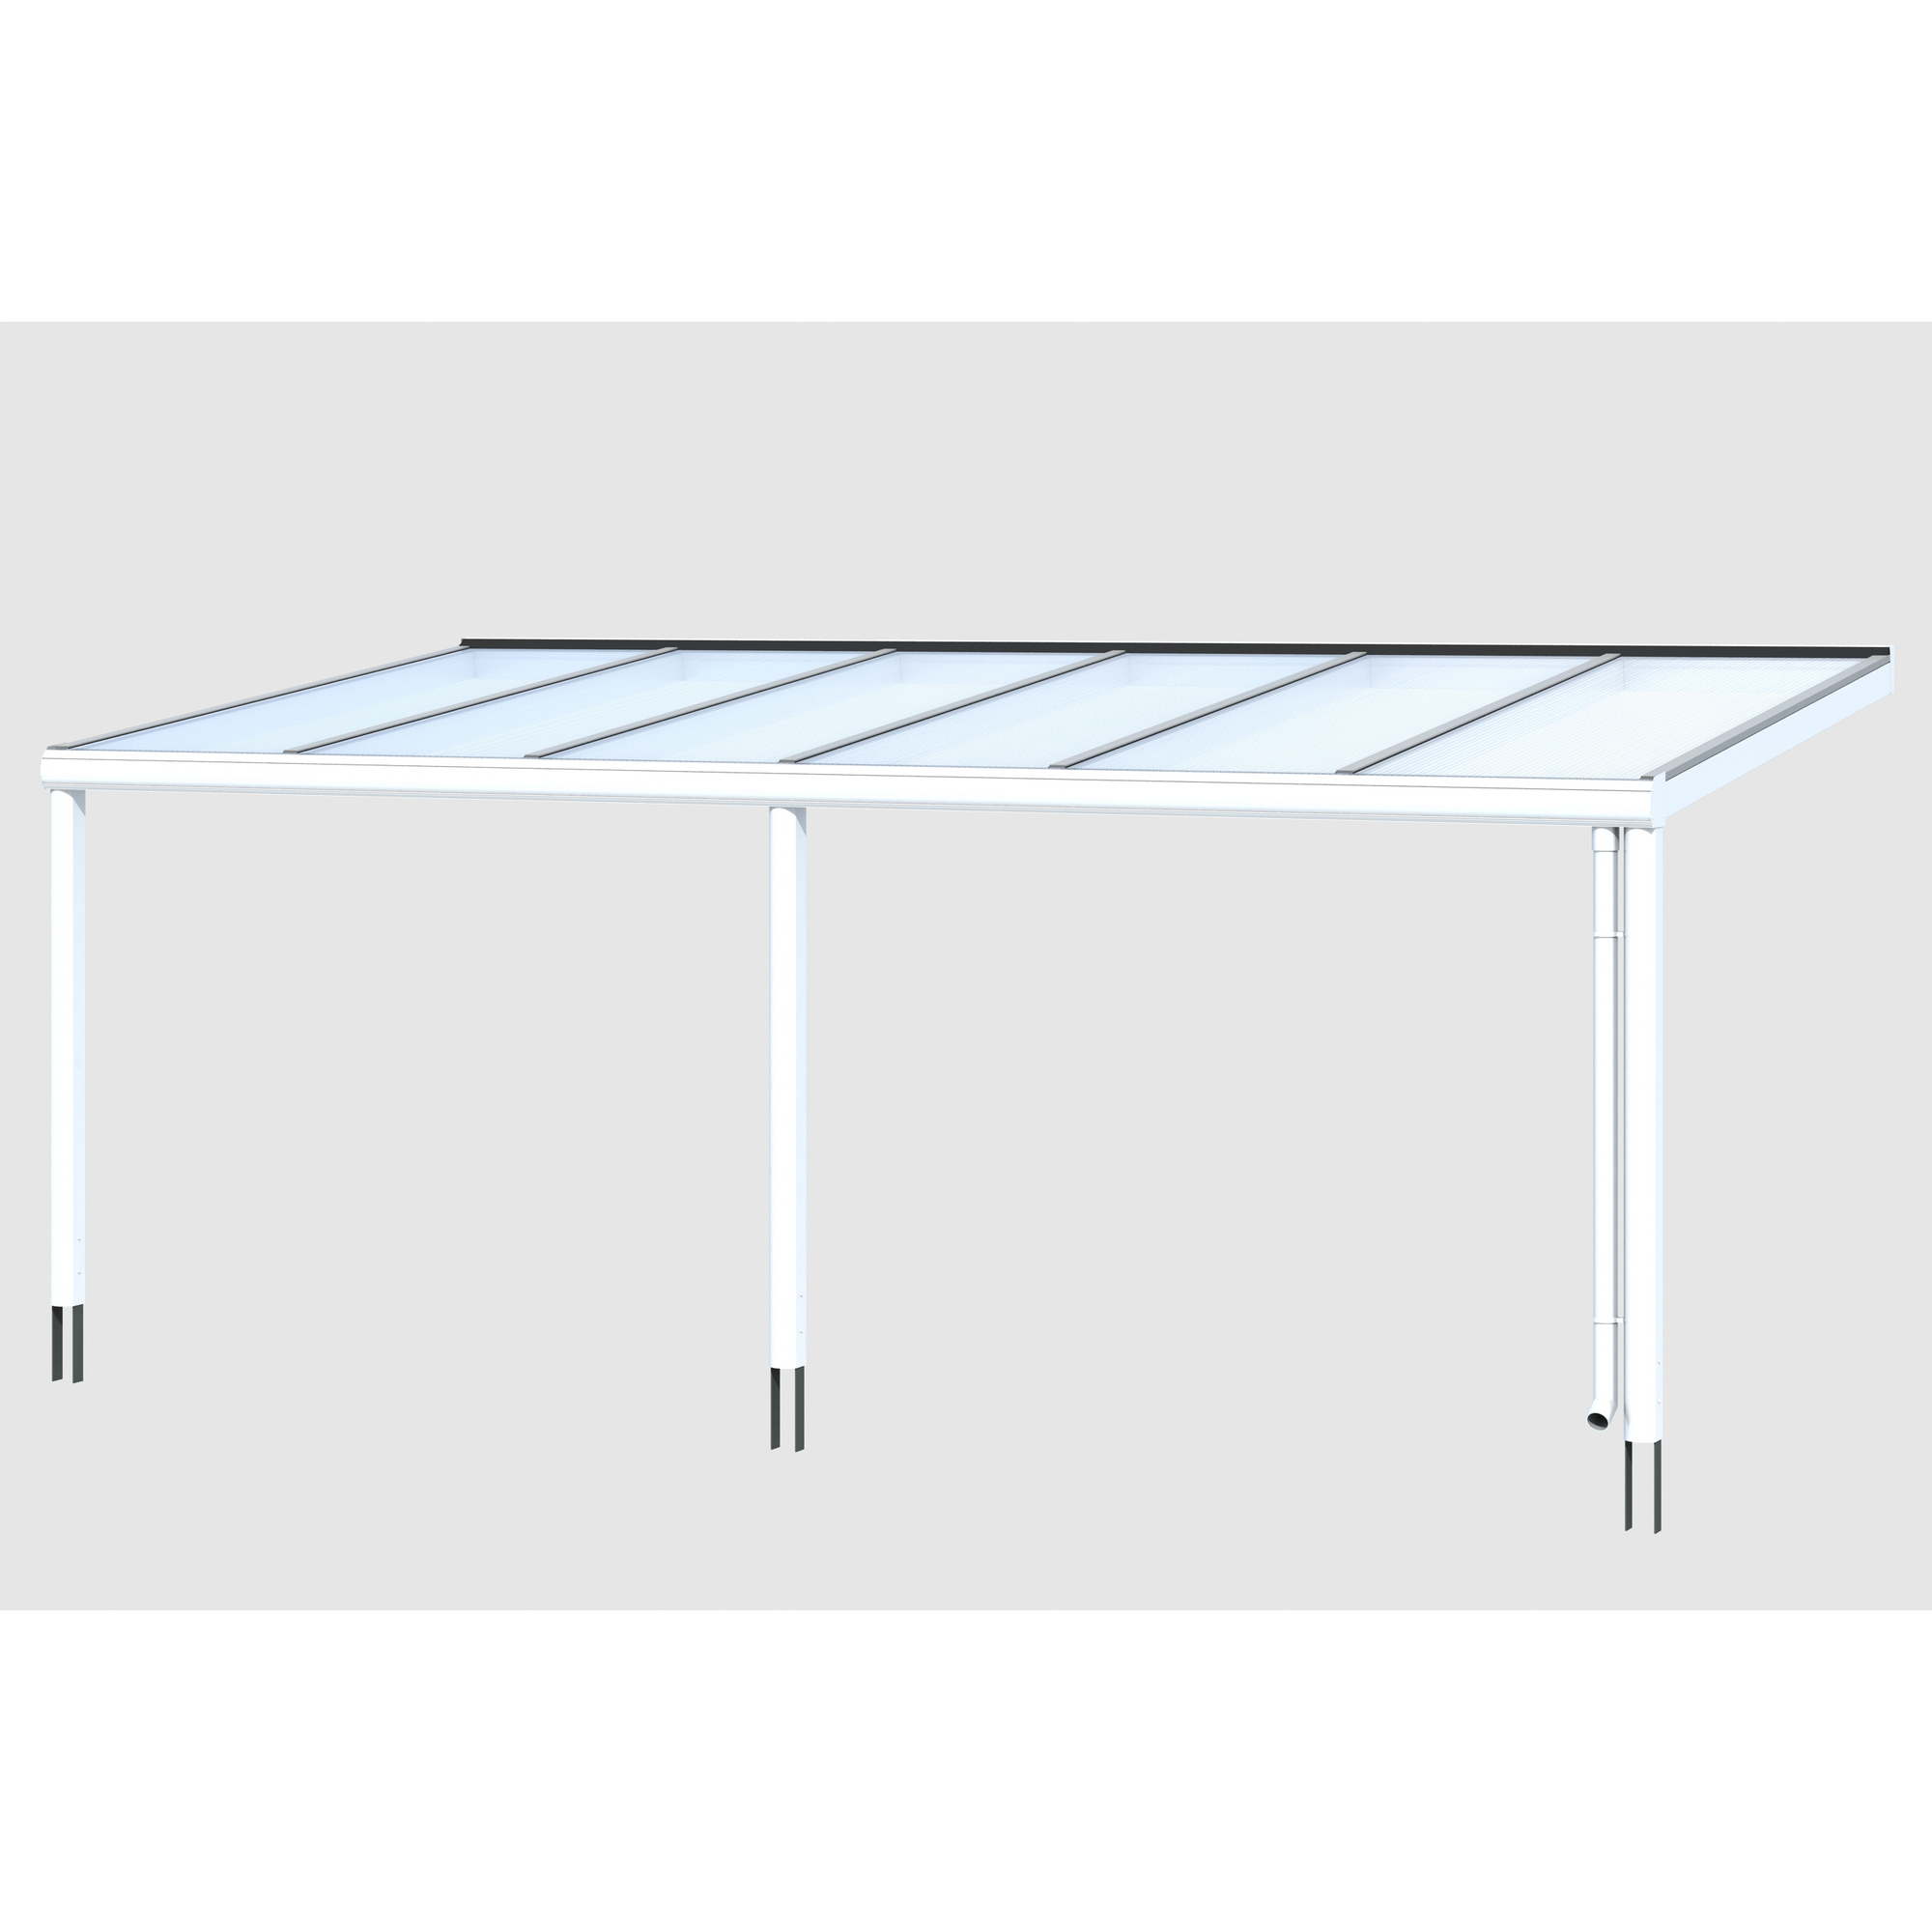 Terrassenüberdachung 'Garda' Aluminium weiß 648 x 257 cm, Aluminium, weiß + product picture